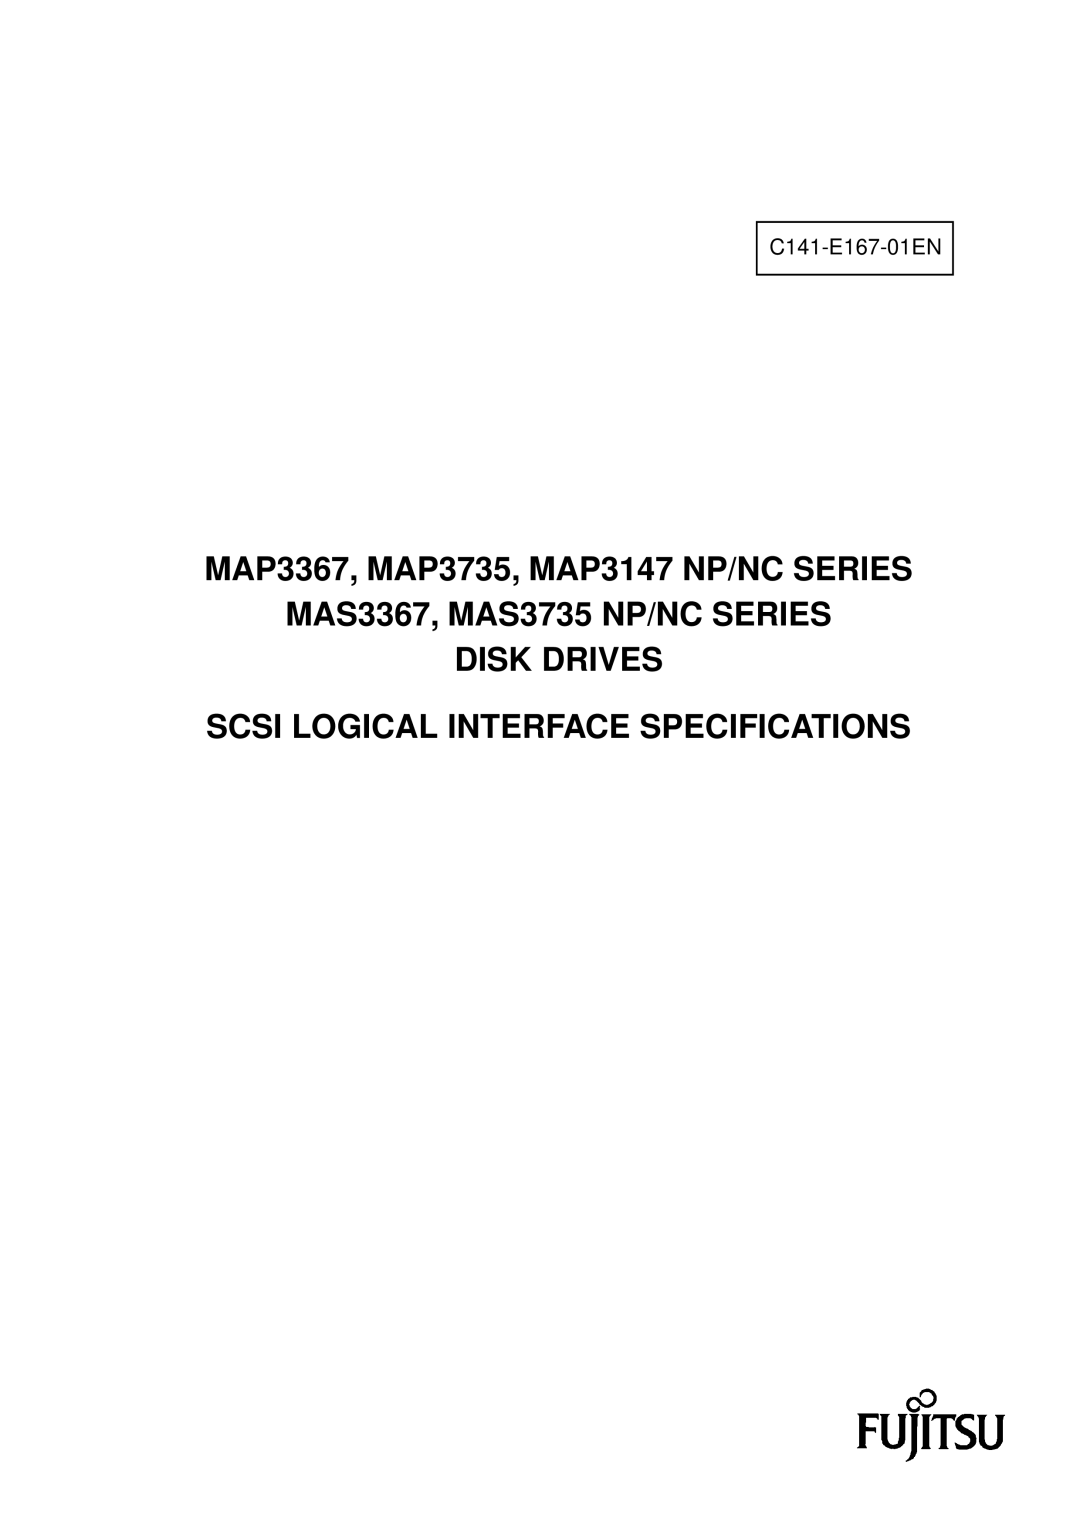 Fujitsu MAS3735, MAS3367 specifications MAP3367, MAP3735, MAP3147 NP/NC Series 